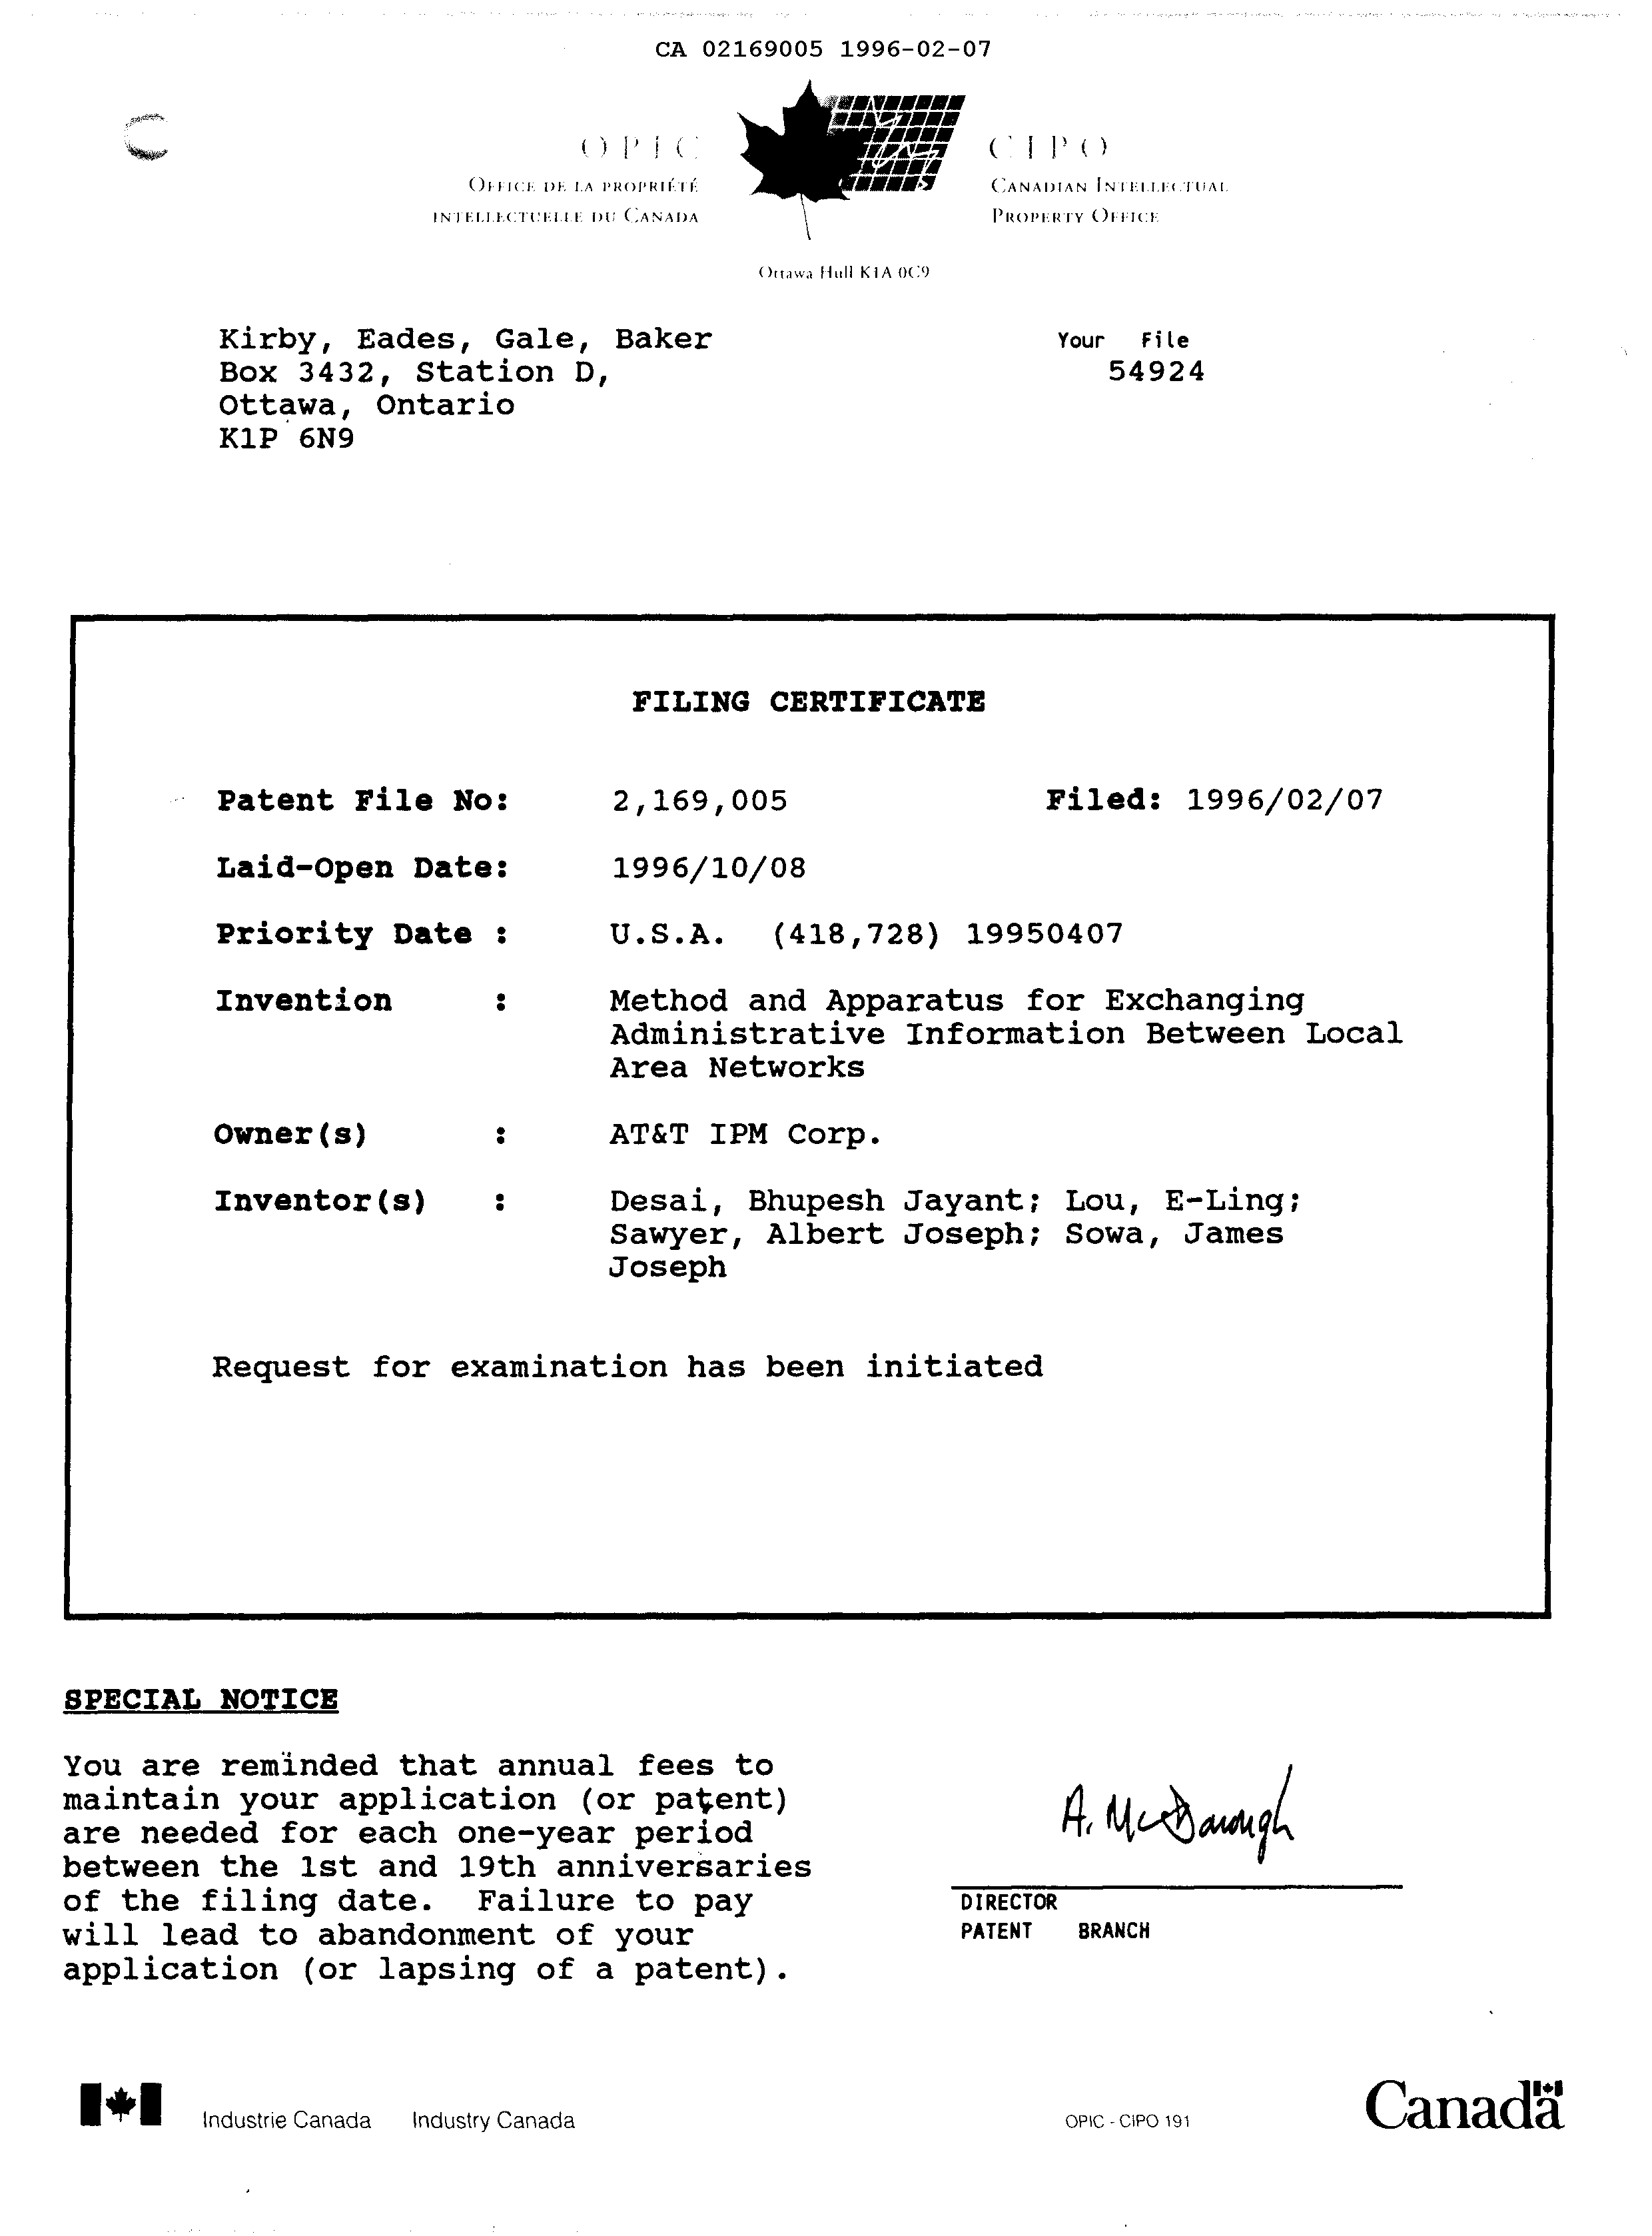 Canadian Patent Document 2169005. Correspondence 19951207. Image 1 of 1